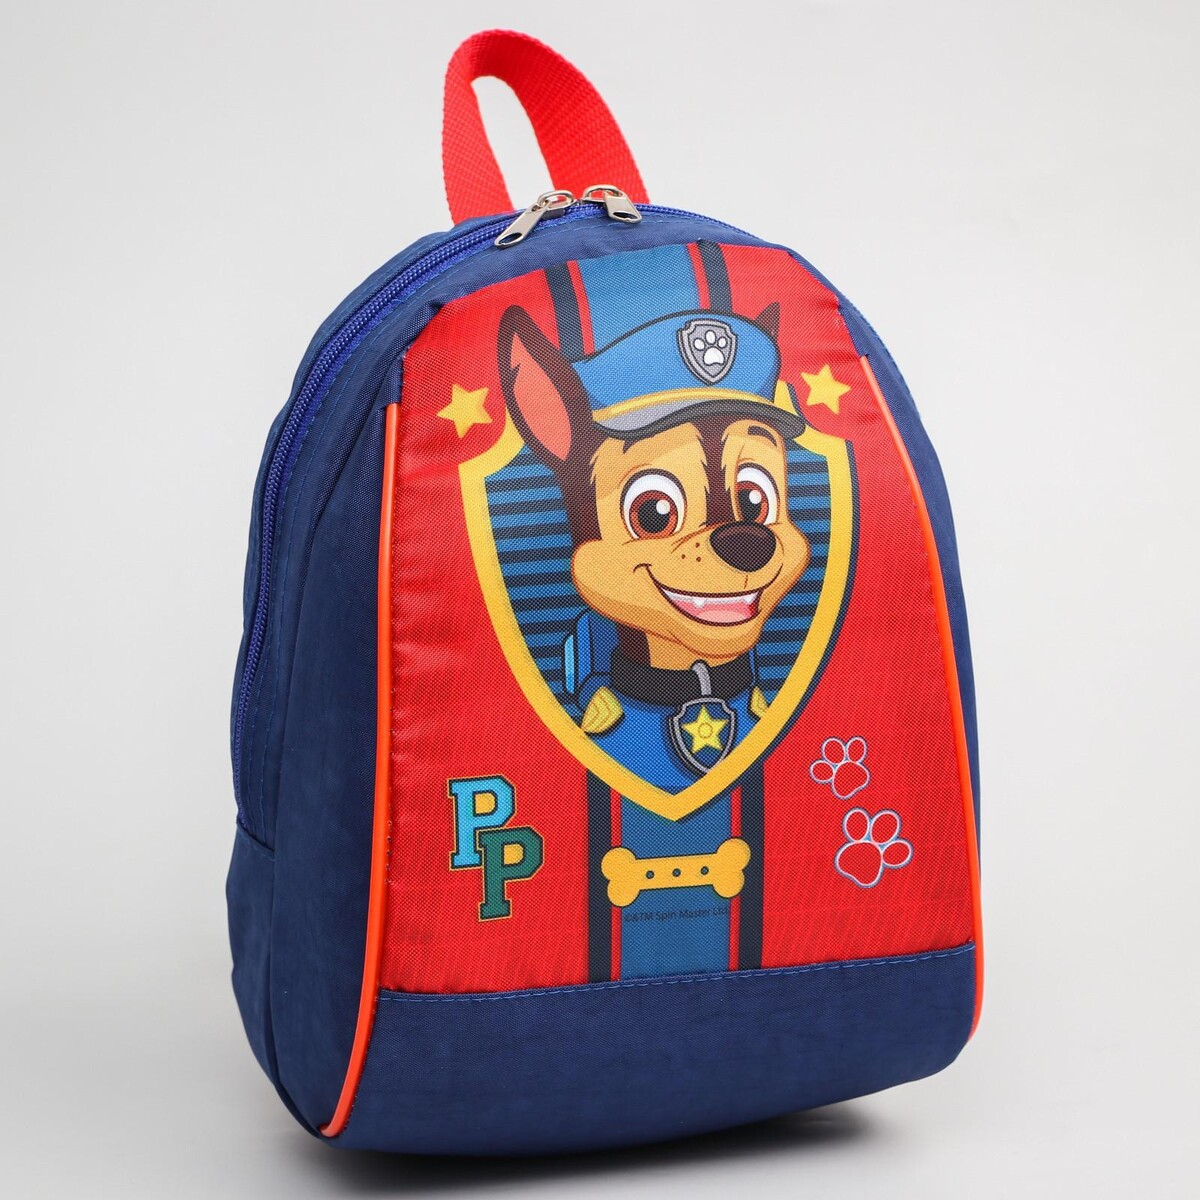 Рюкзак детский, отдел на молнии, 20 см х 13 см х 26 см